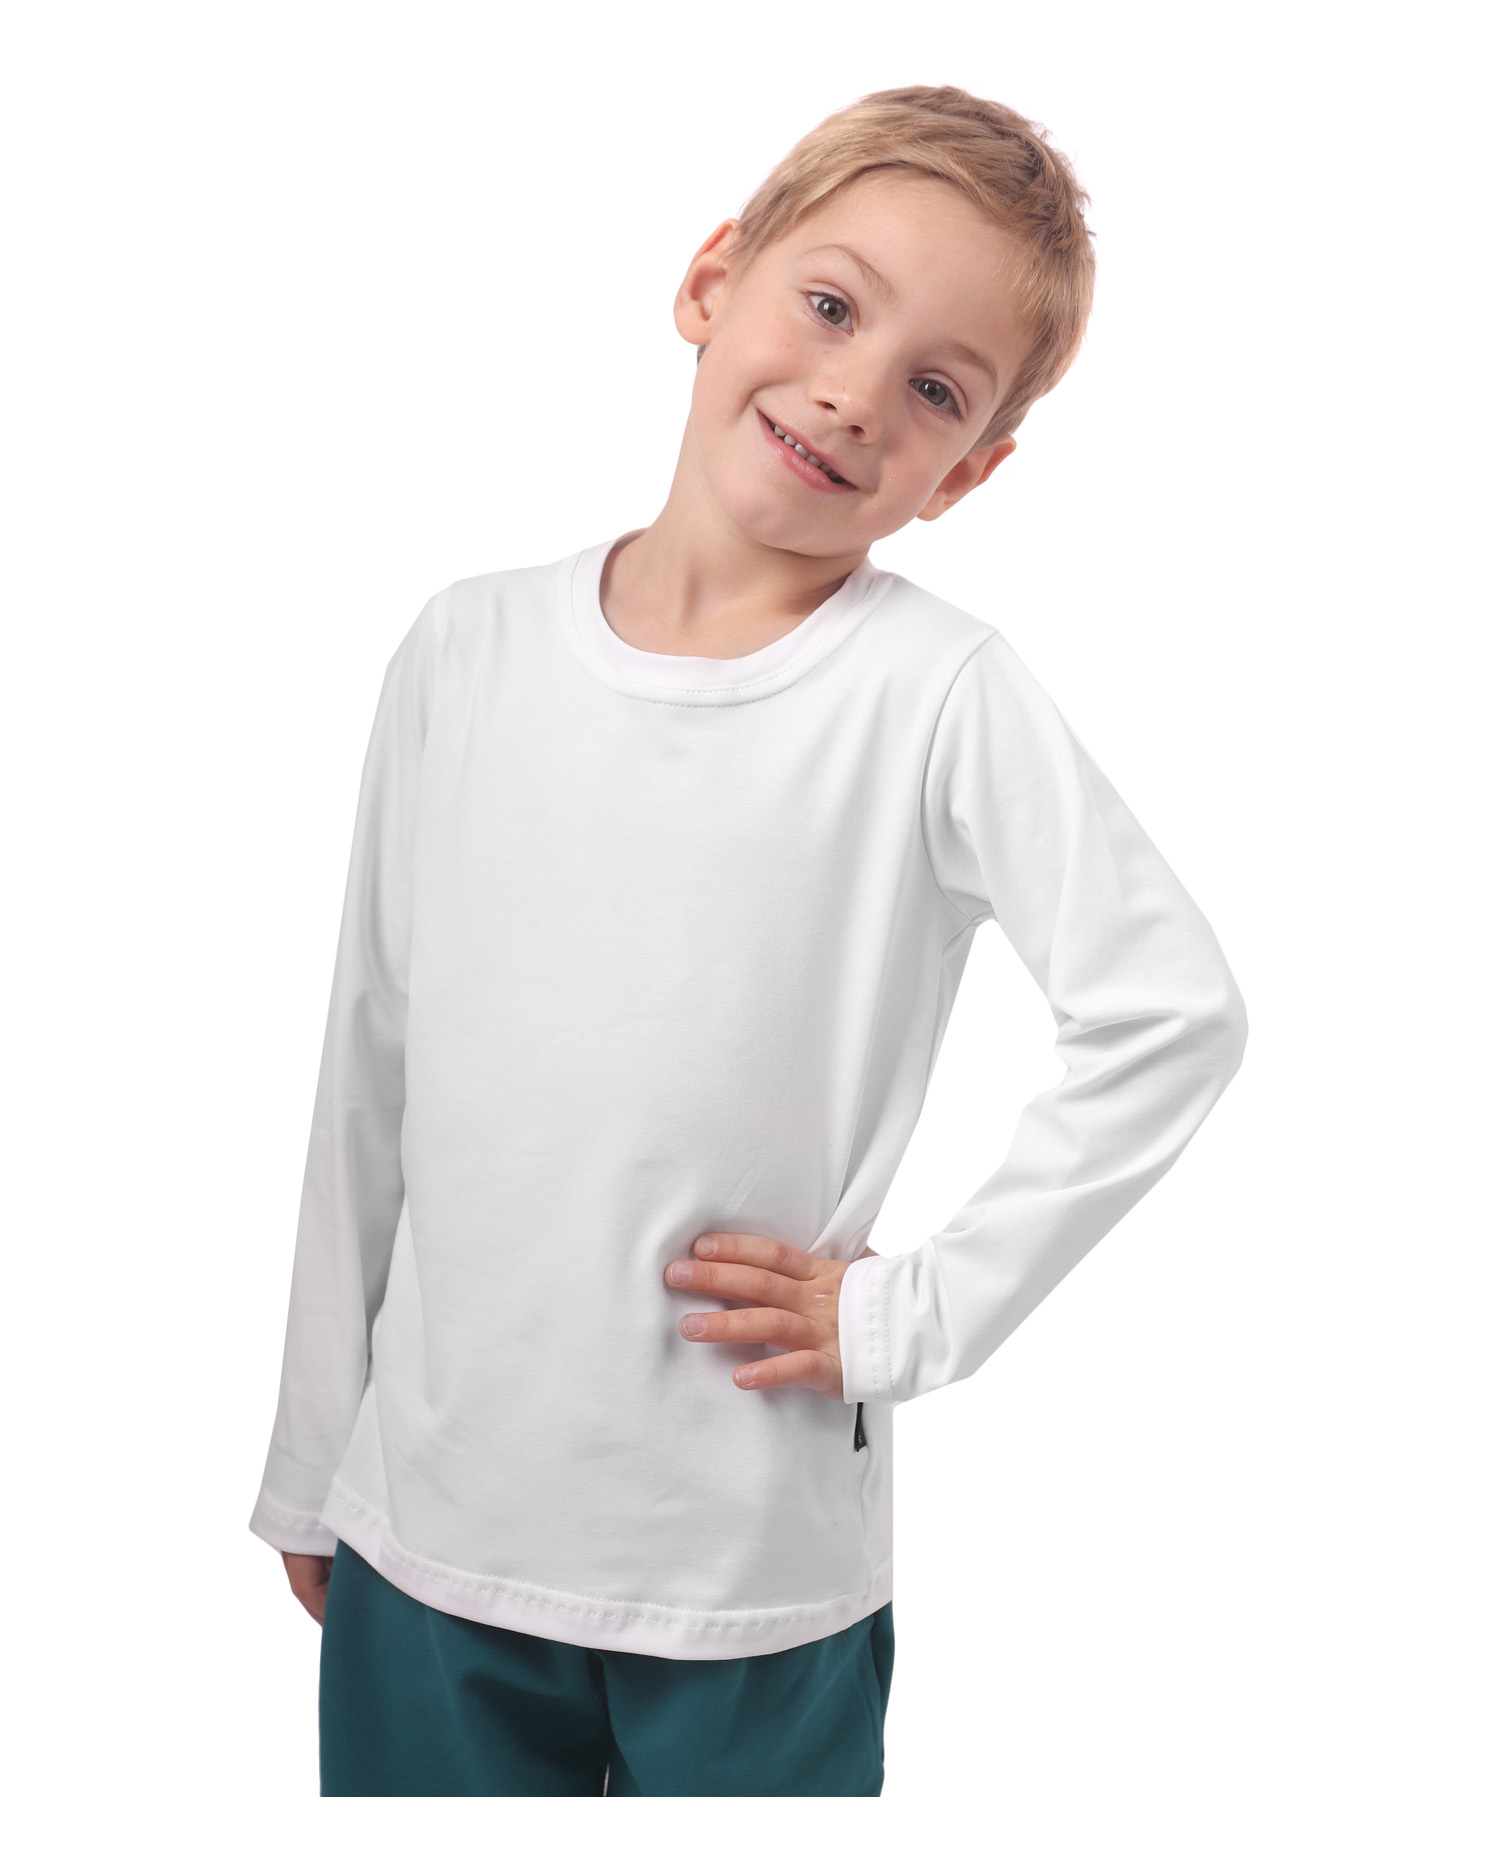 Kinder-T-Shirt, Langarm, weiß